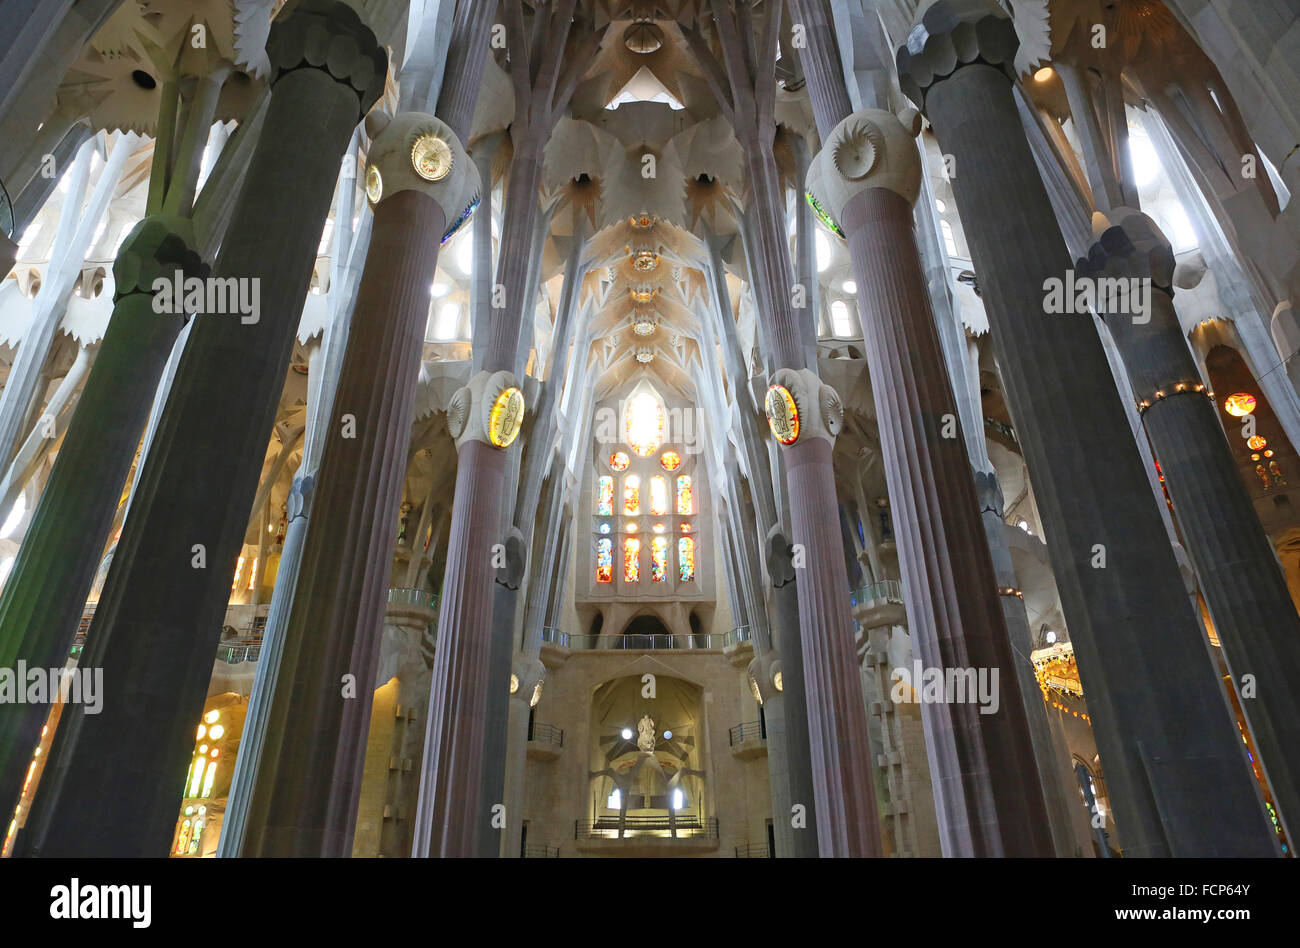 Plafond de la basilique Sagrada Familia, Barcelona, Espagne. Banque D'Images